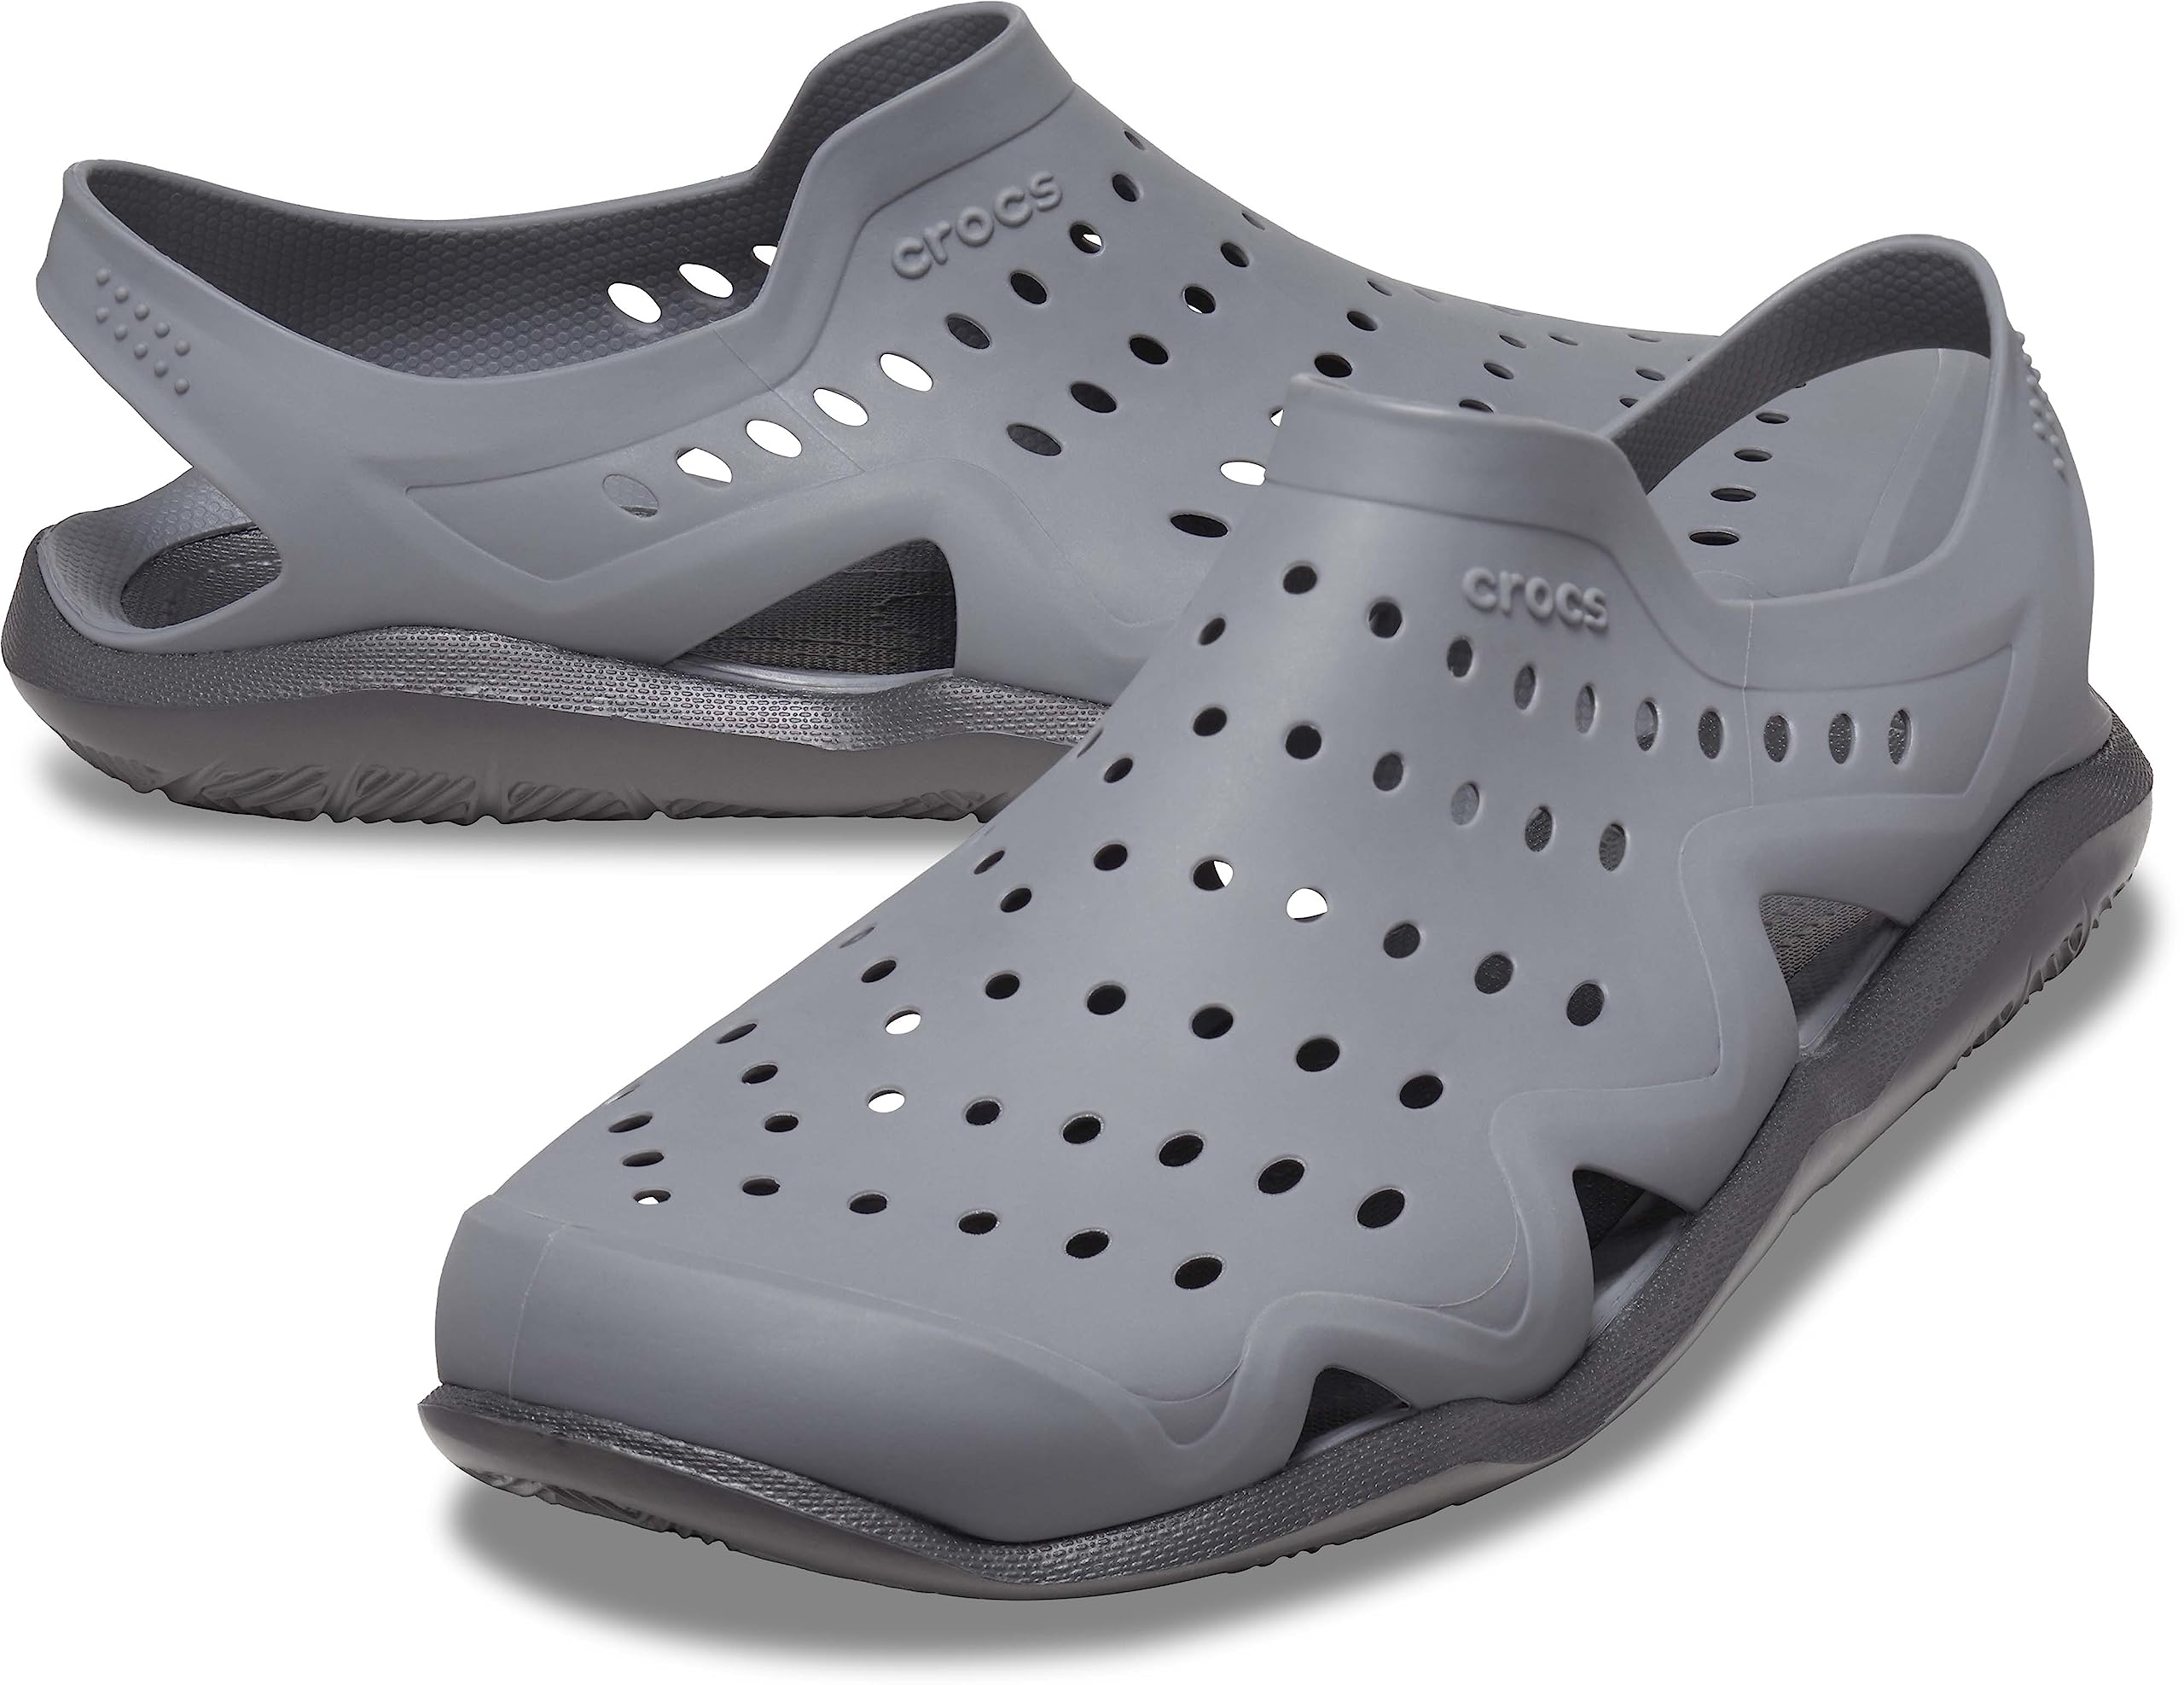 Crocs Men's Swiftwater Wave Sandals, Water Shoes, Charcoal/Graphite, 7 Men